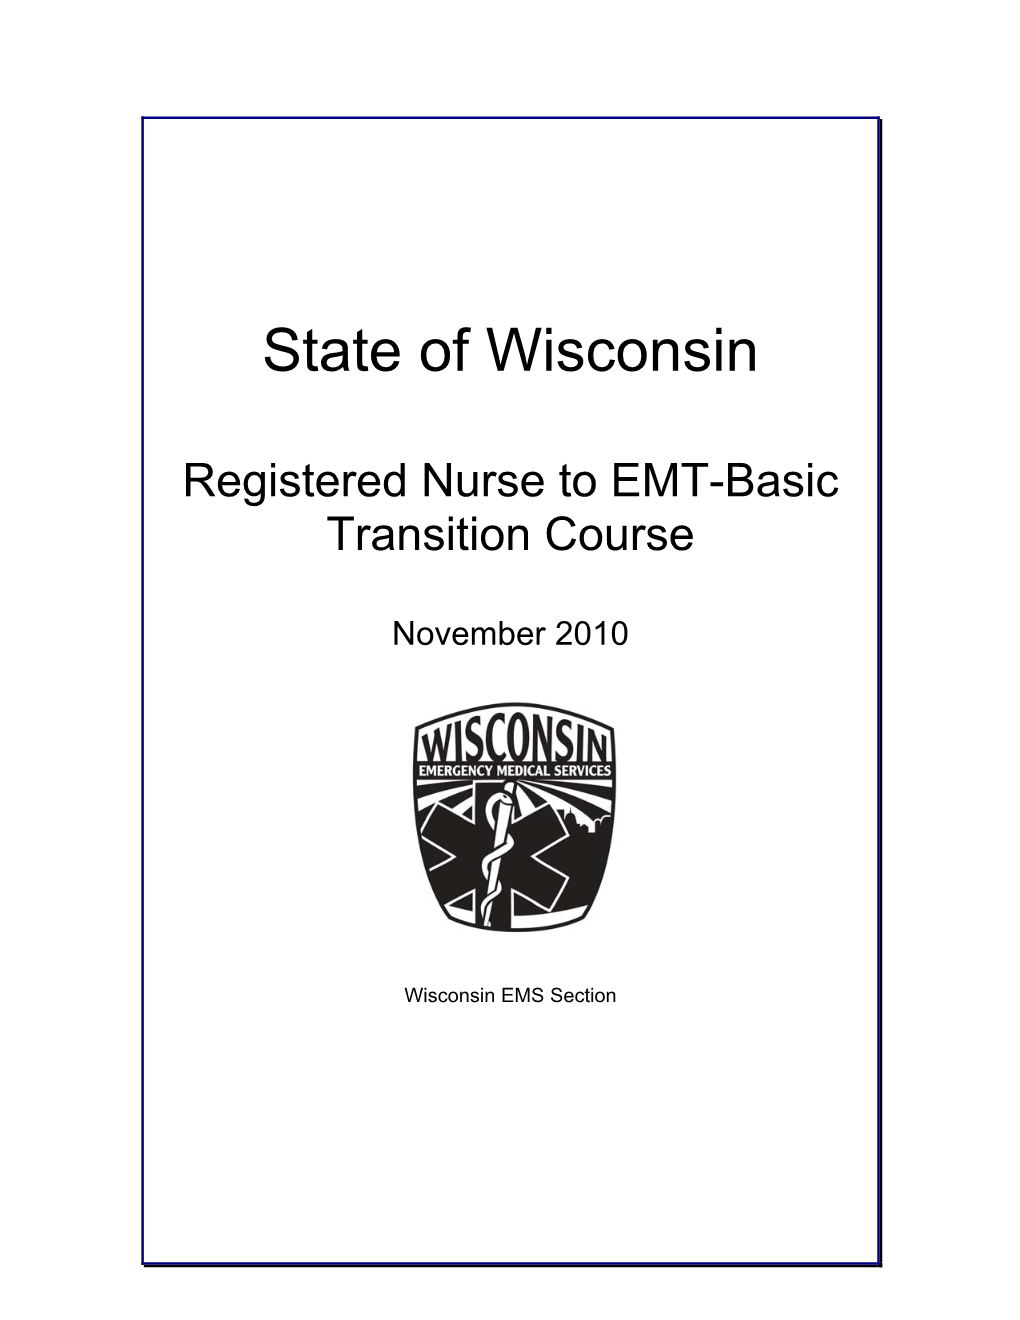 RN to EMT-Basic Transition Course